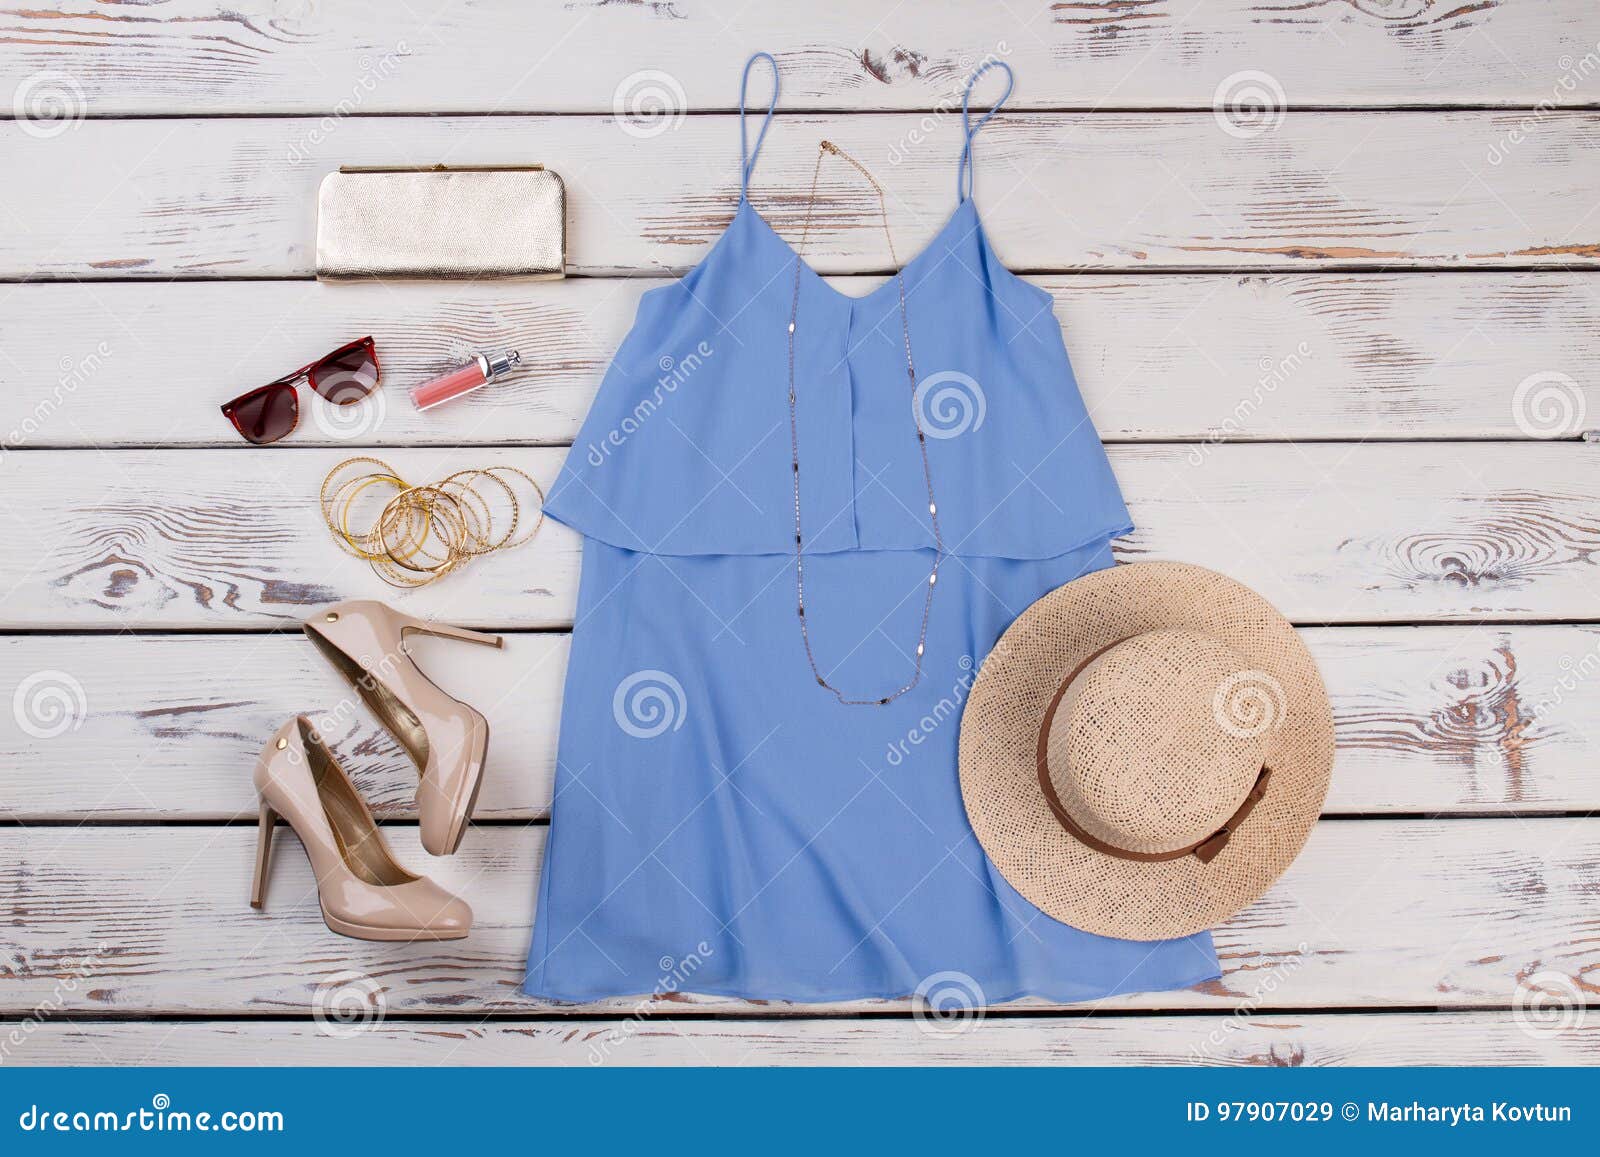 Woman Summer Fashion Style. Stock Image - Image of fashionable ...